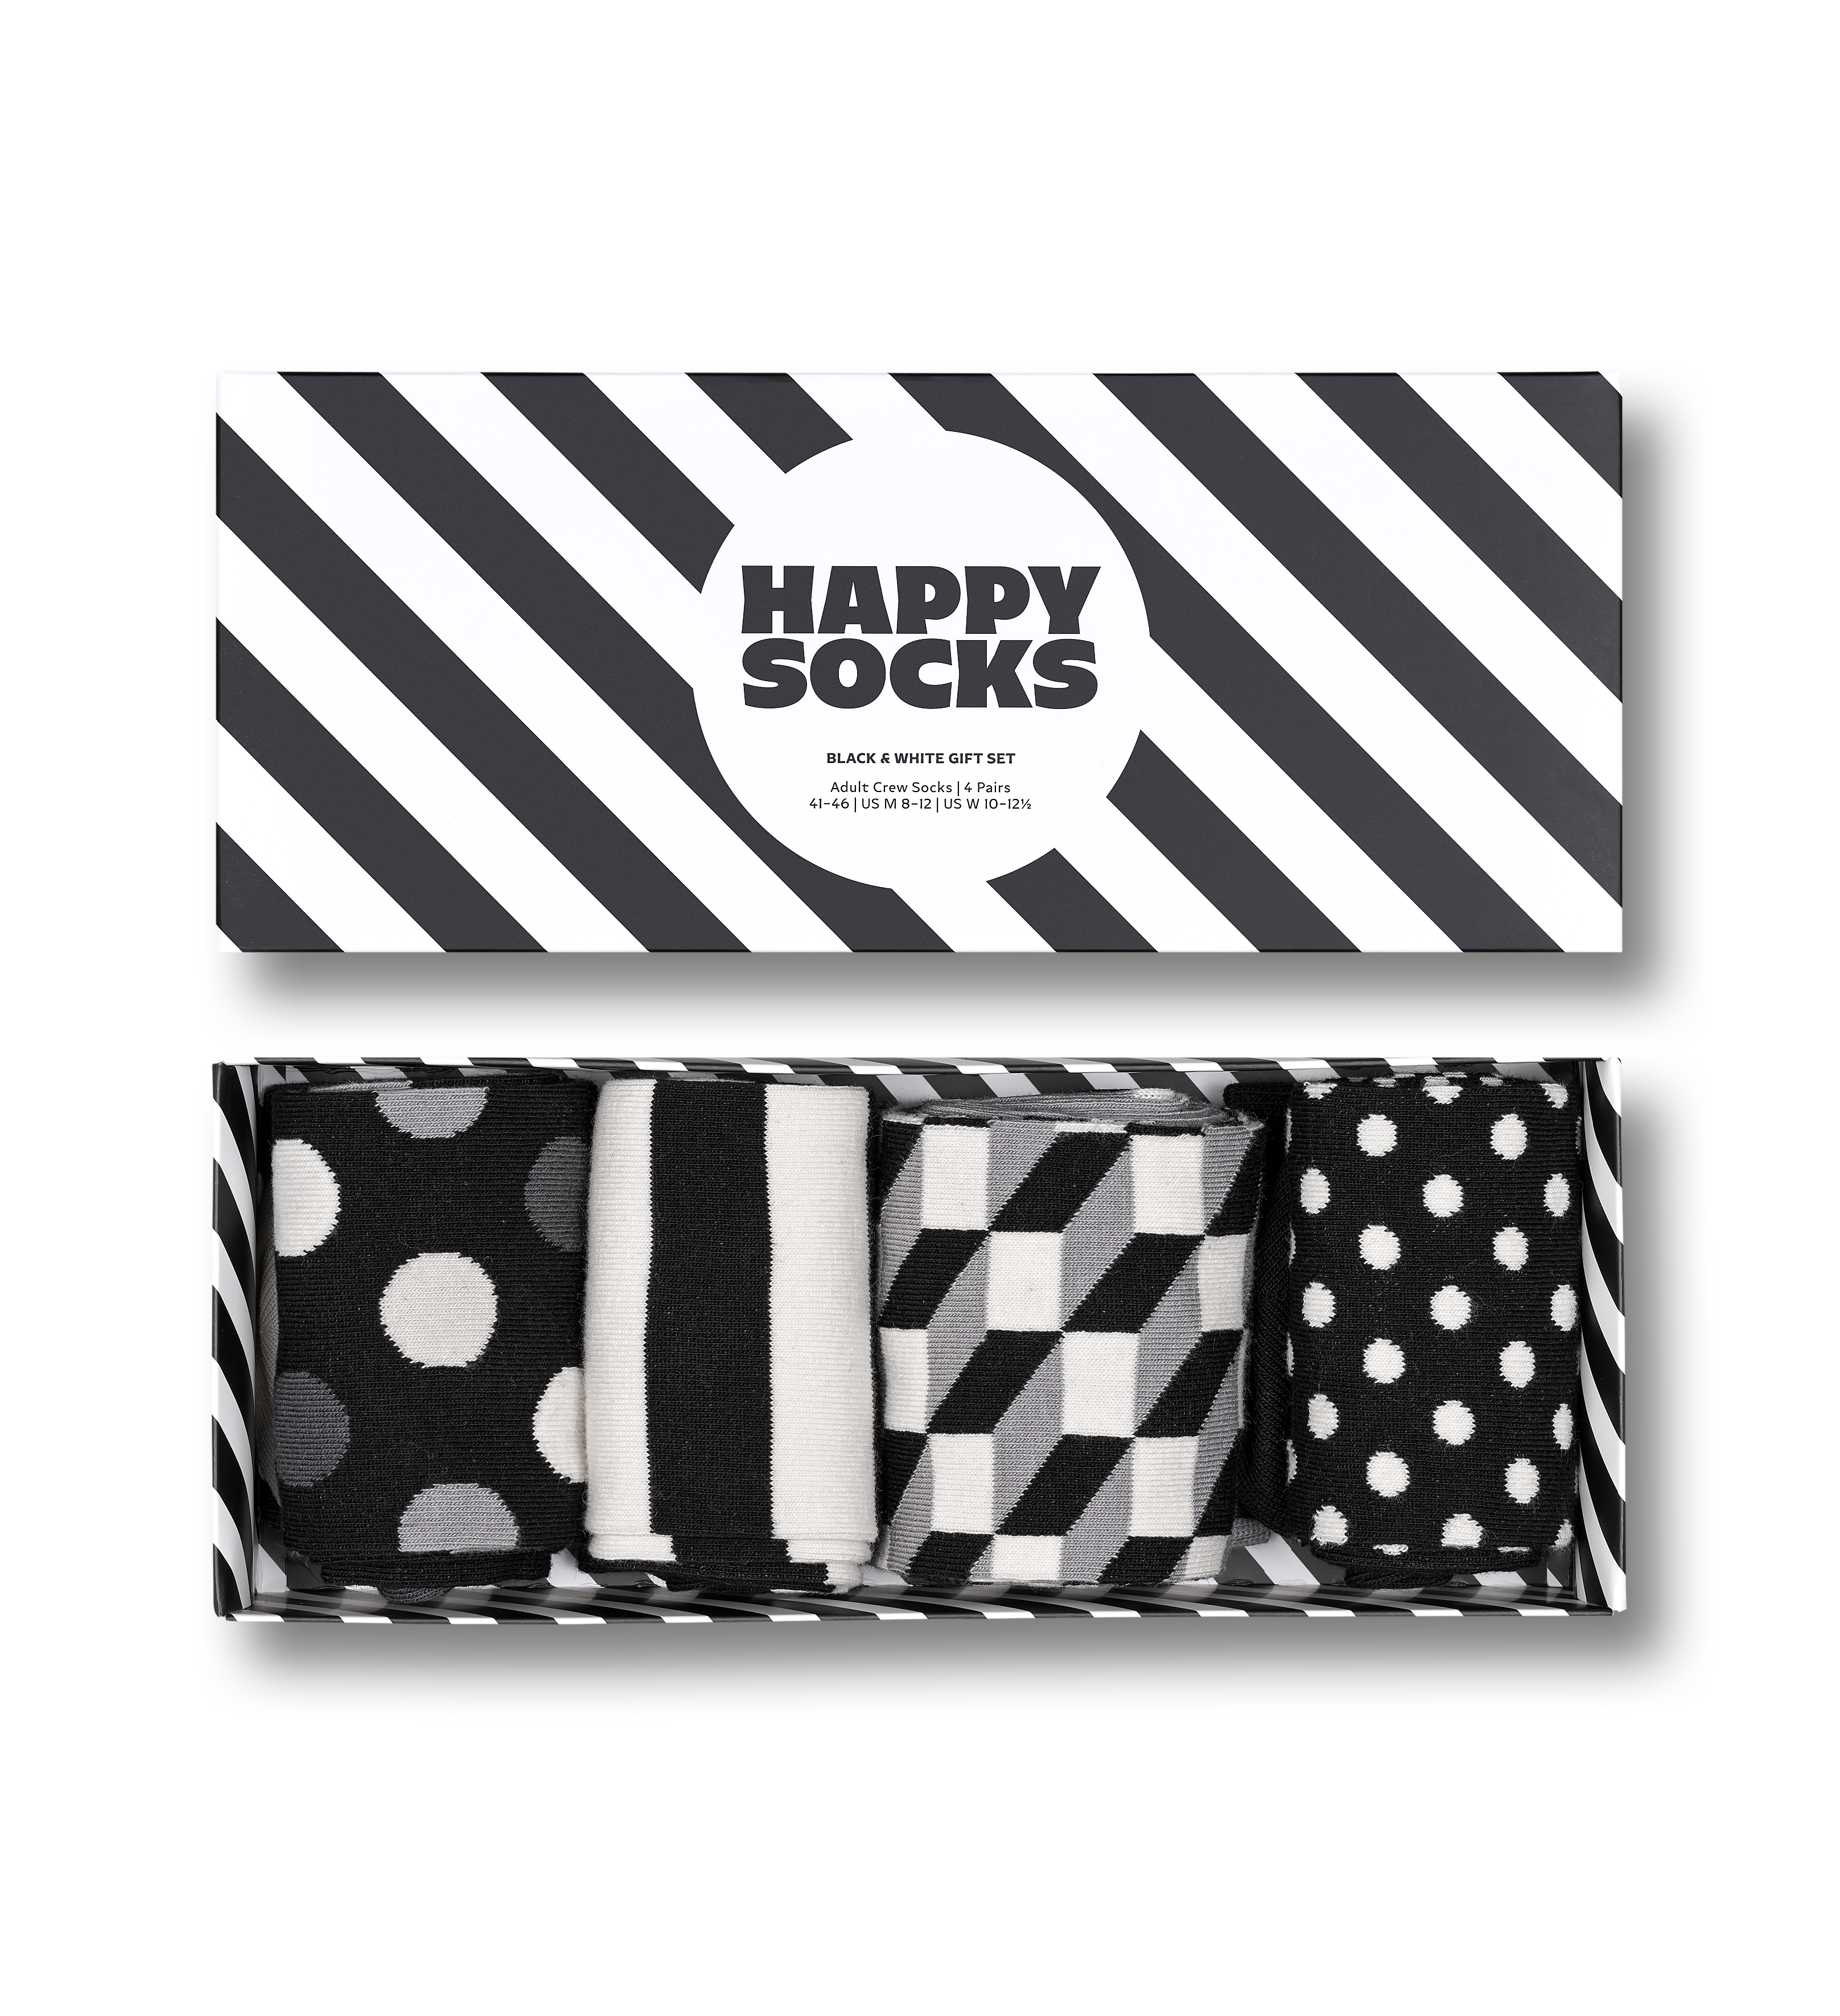 4-Pack Classic Black & White Crew Gift Set